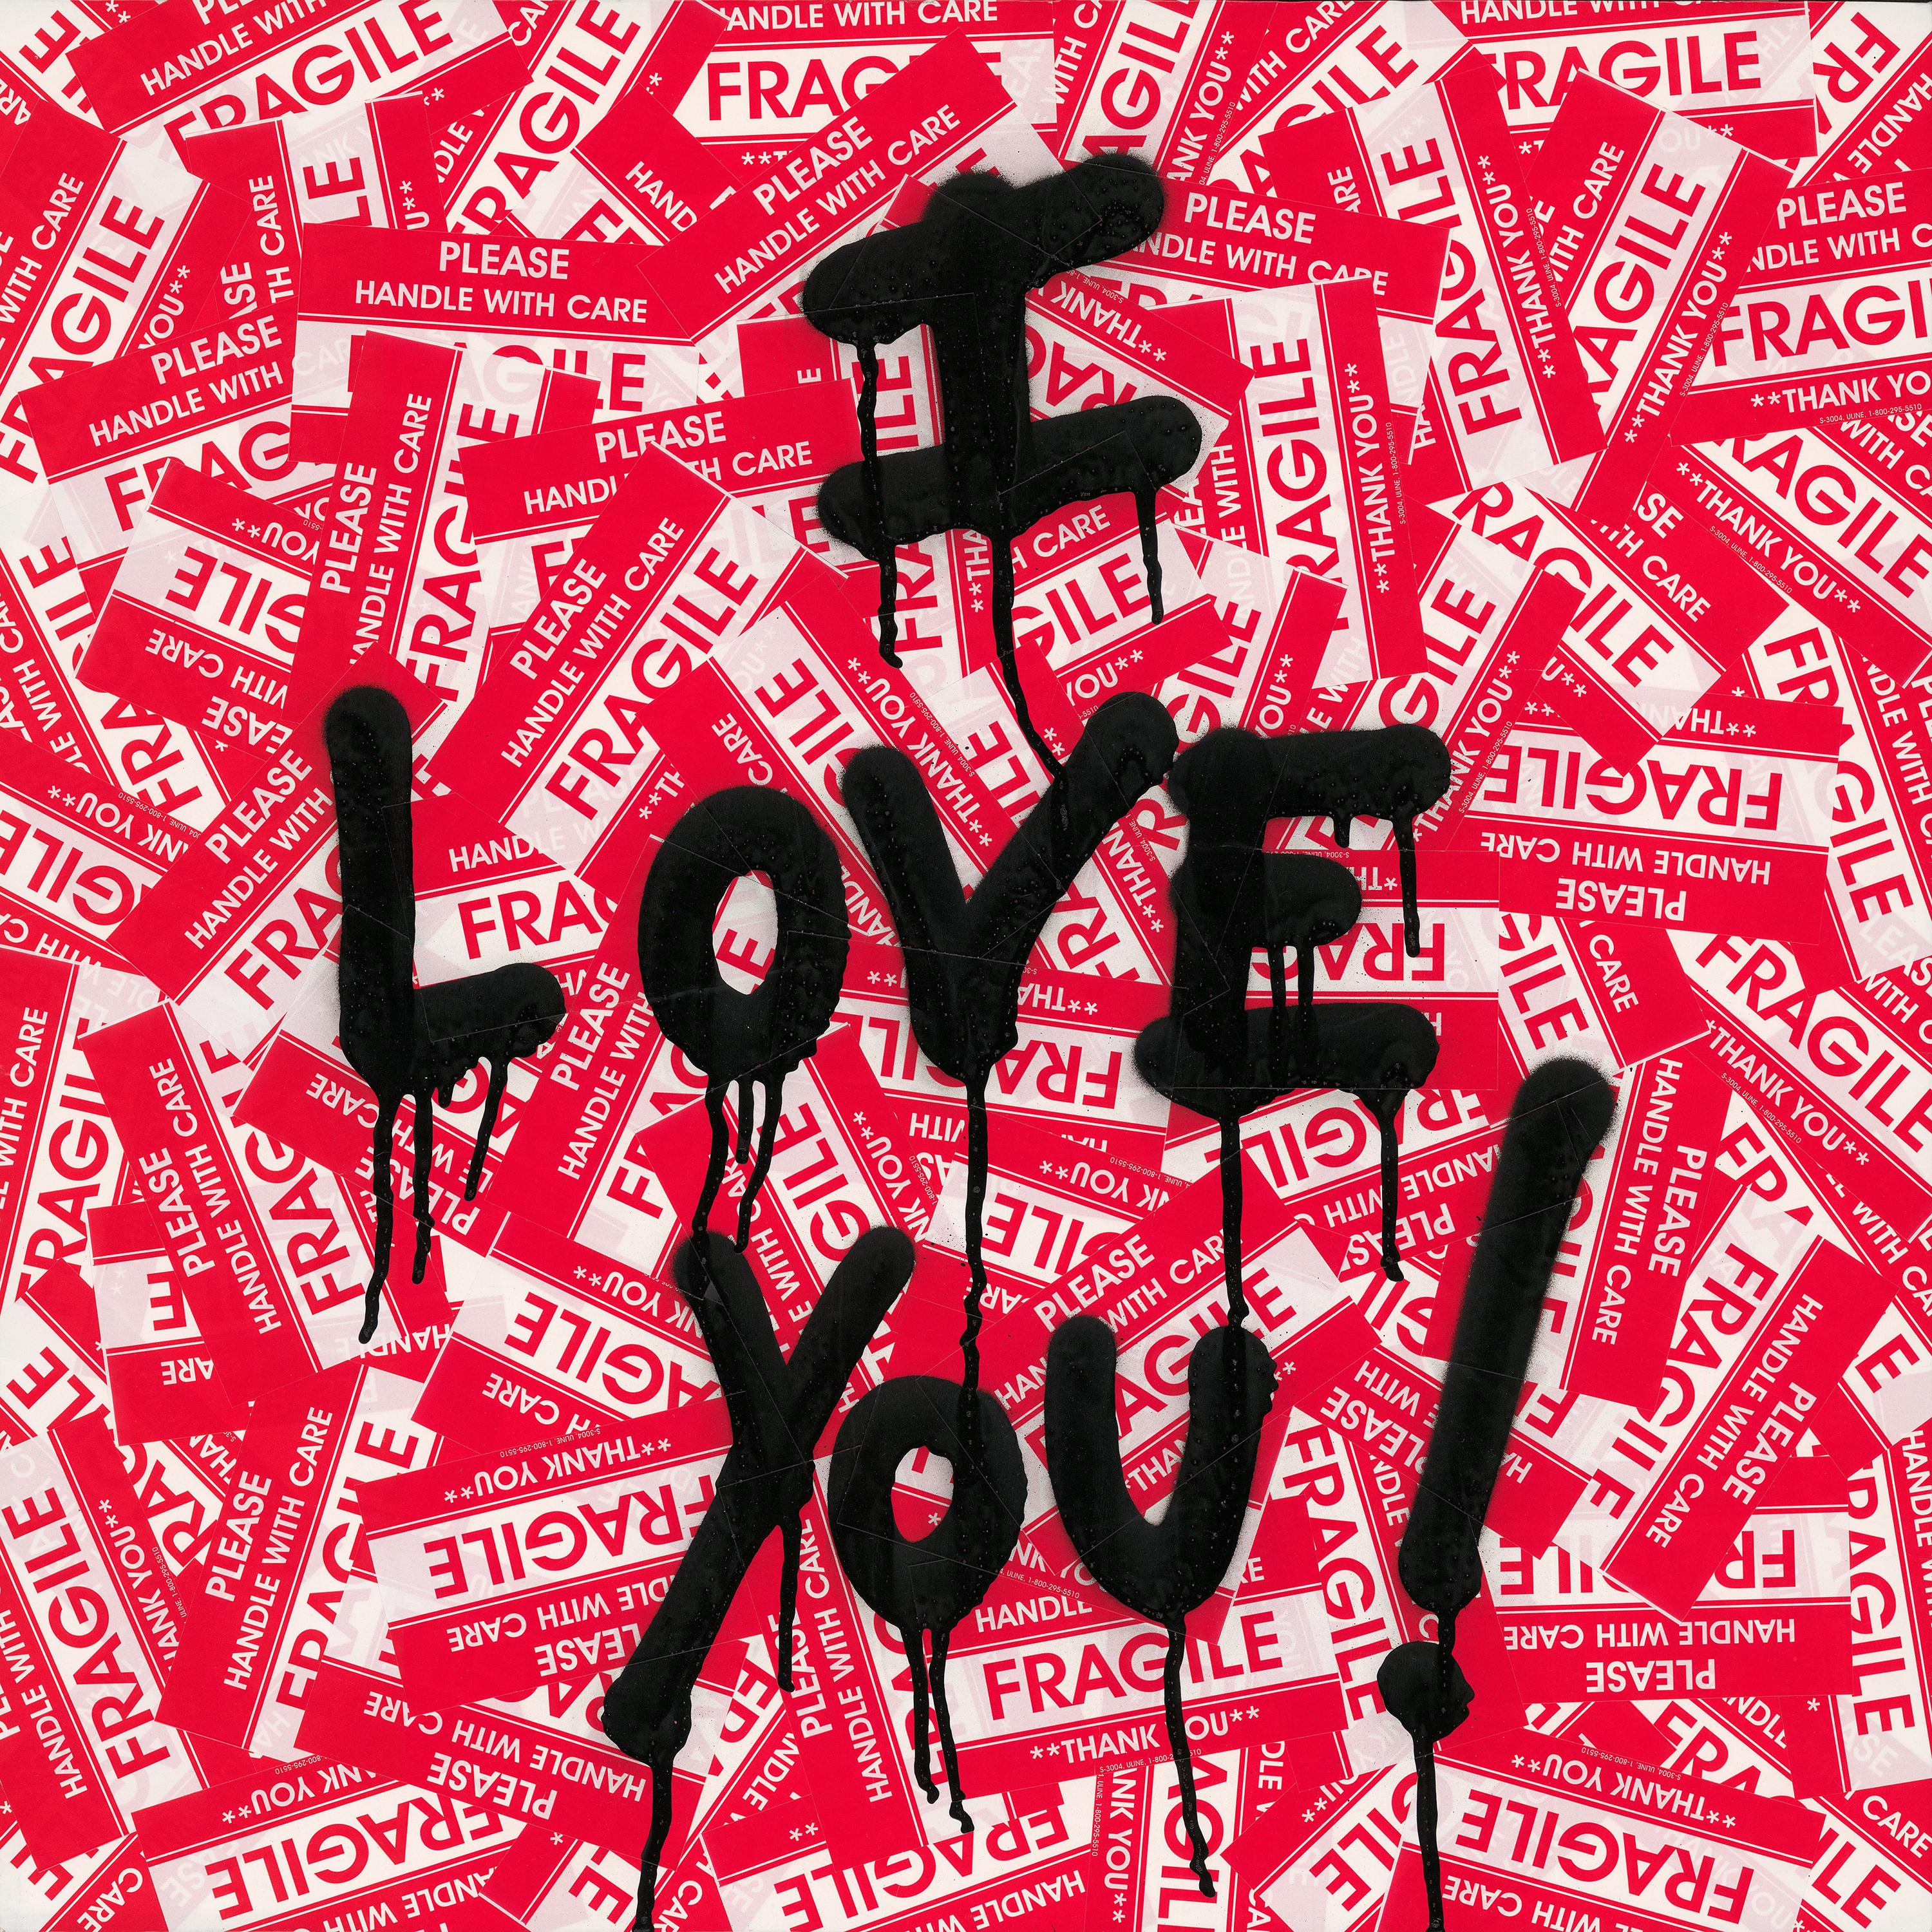 I Love You - Mixed Media Art by Mr. Brainwash